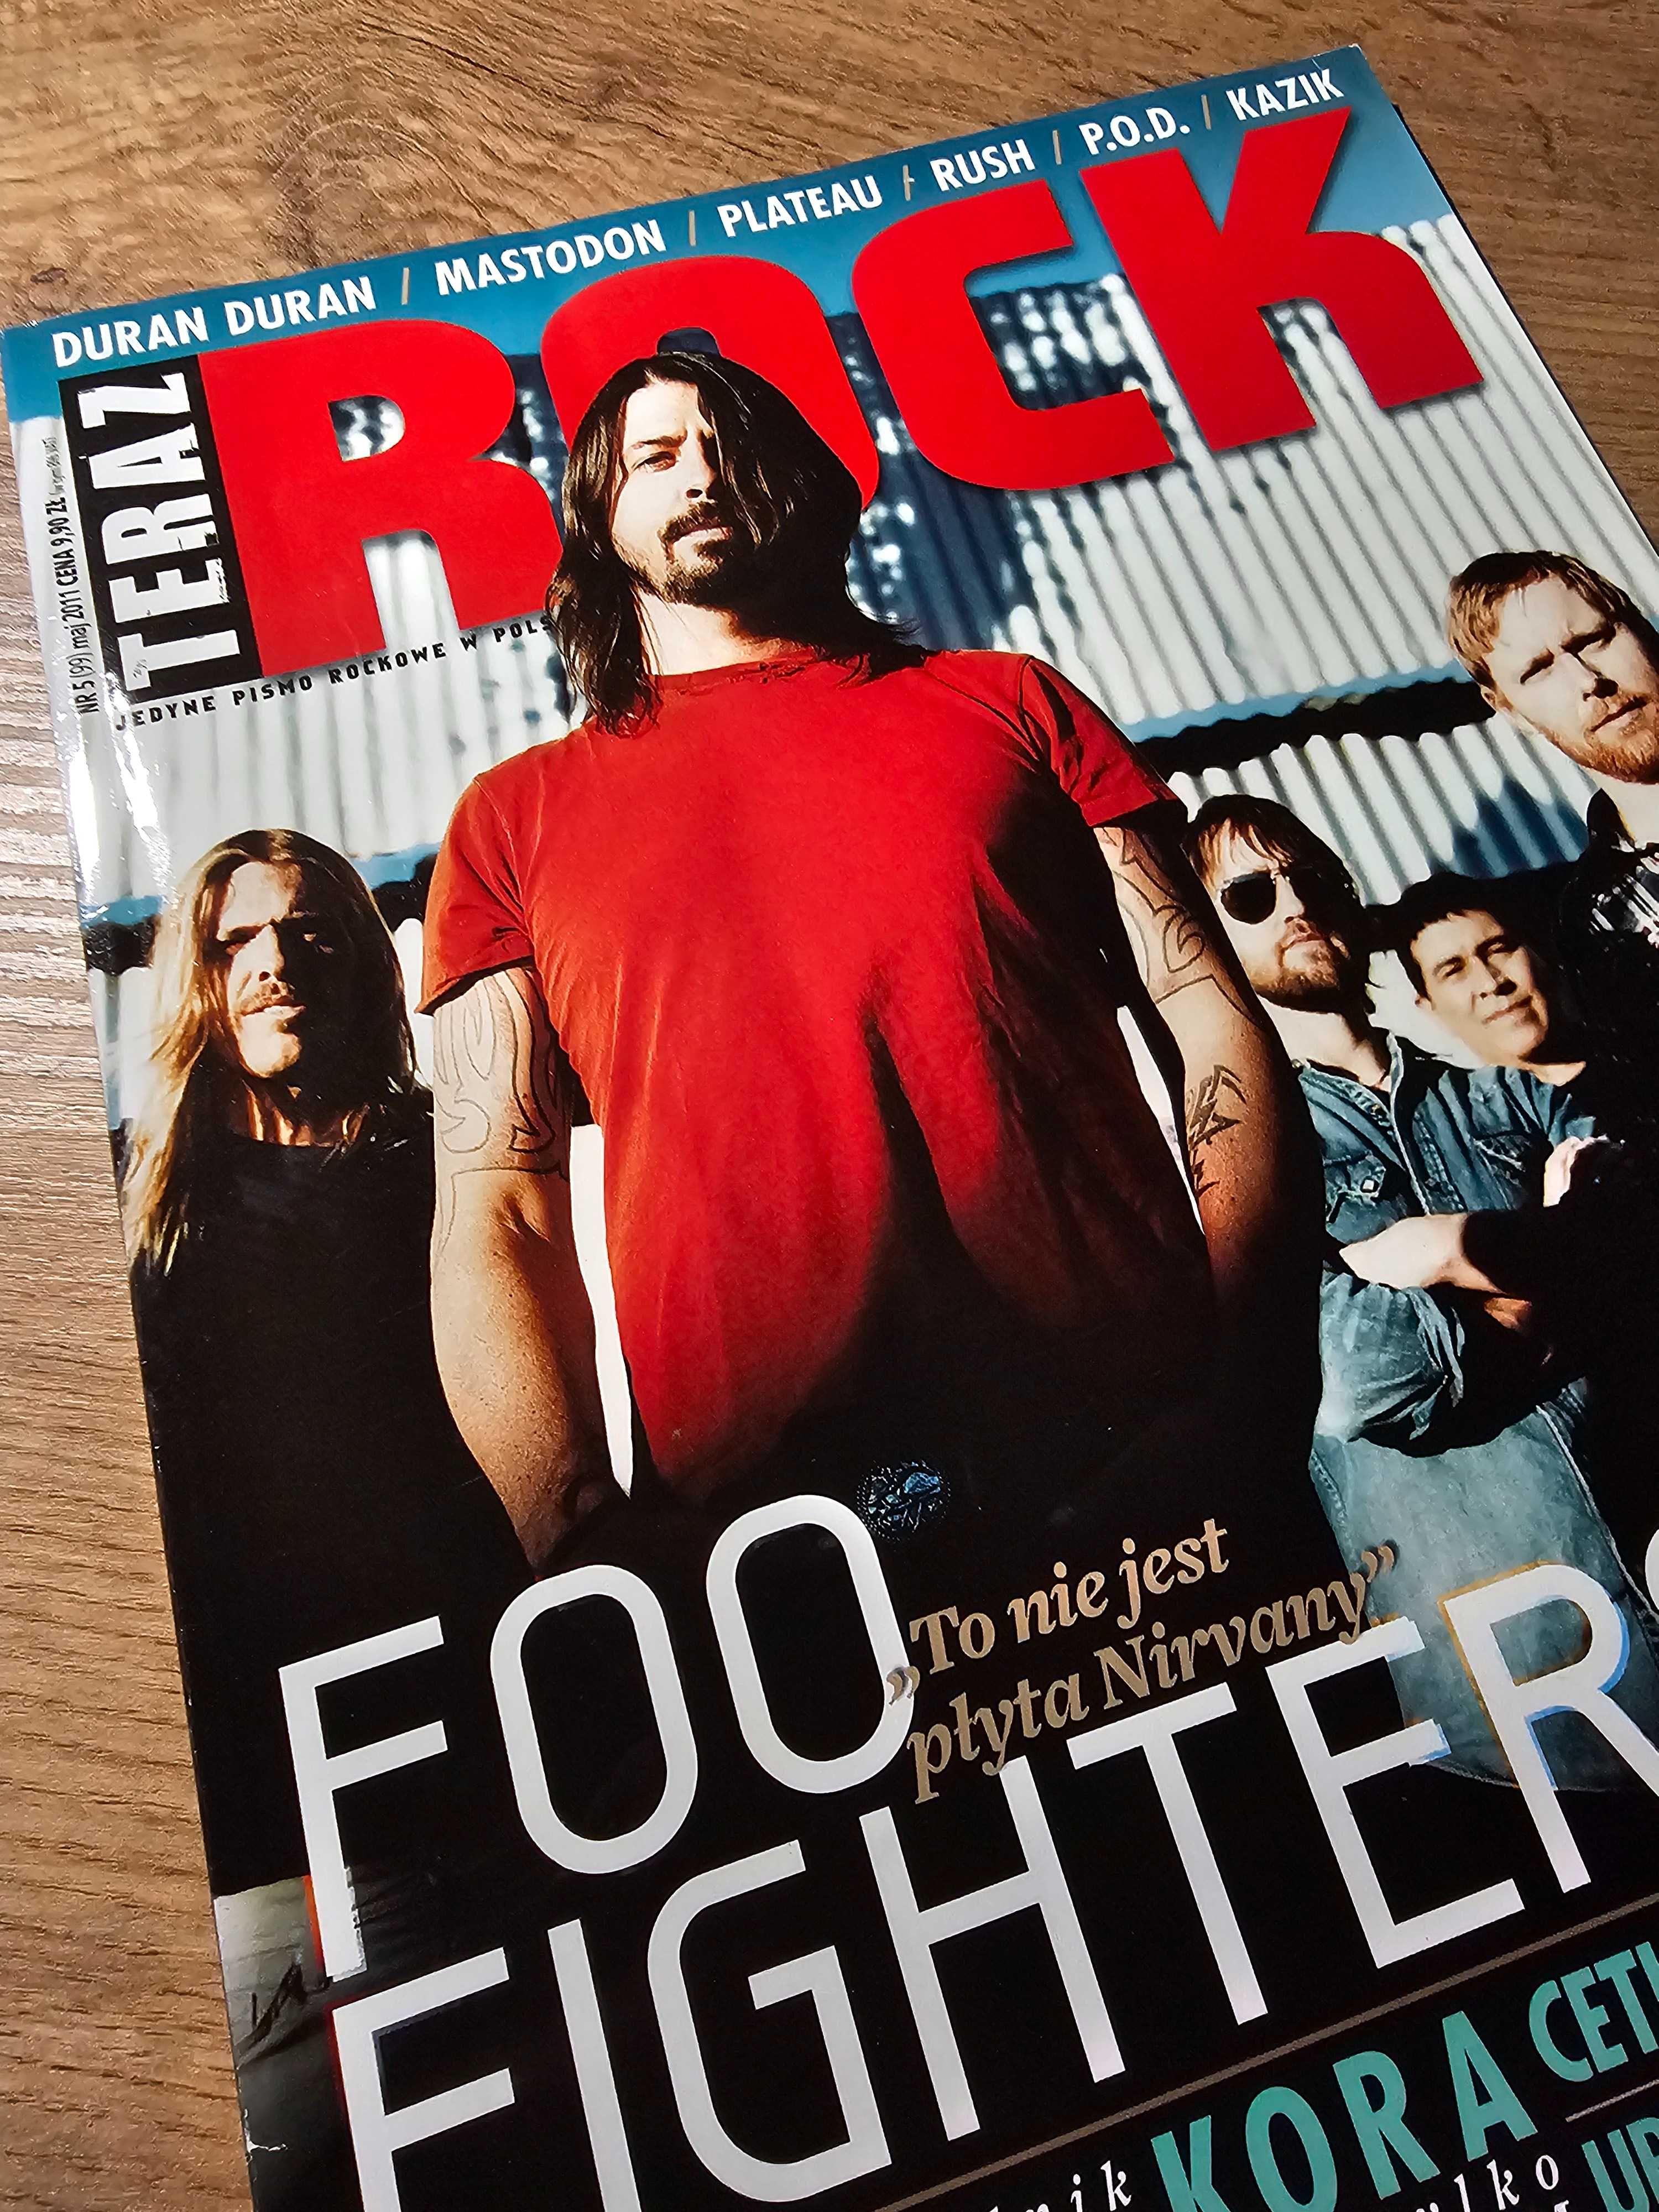 Teraz Rock 5/2011 - Foo Fighters, R.E.M., Slayer, Kora, Duran Duran